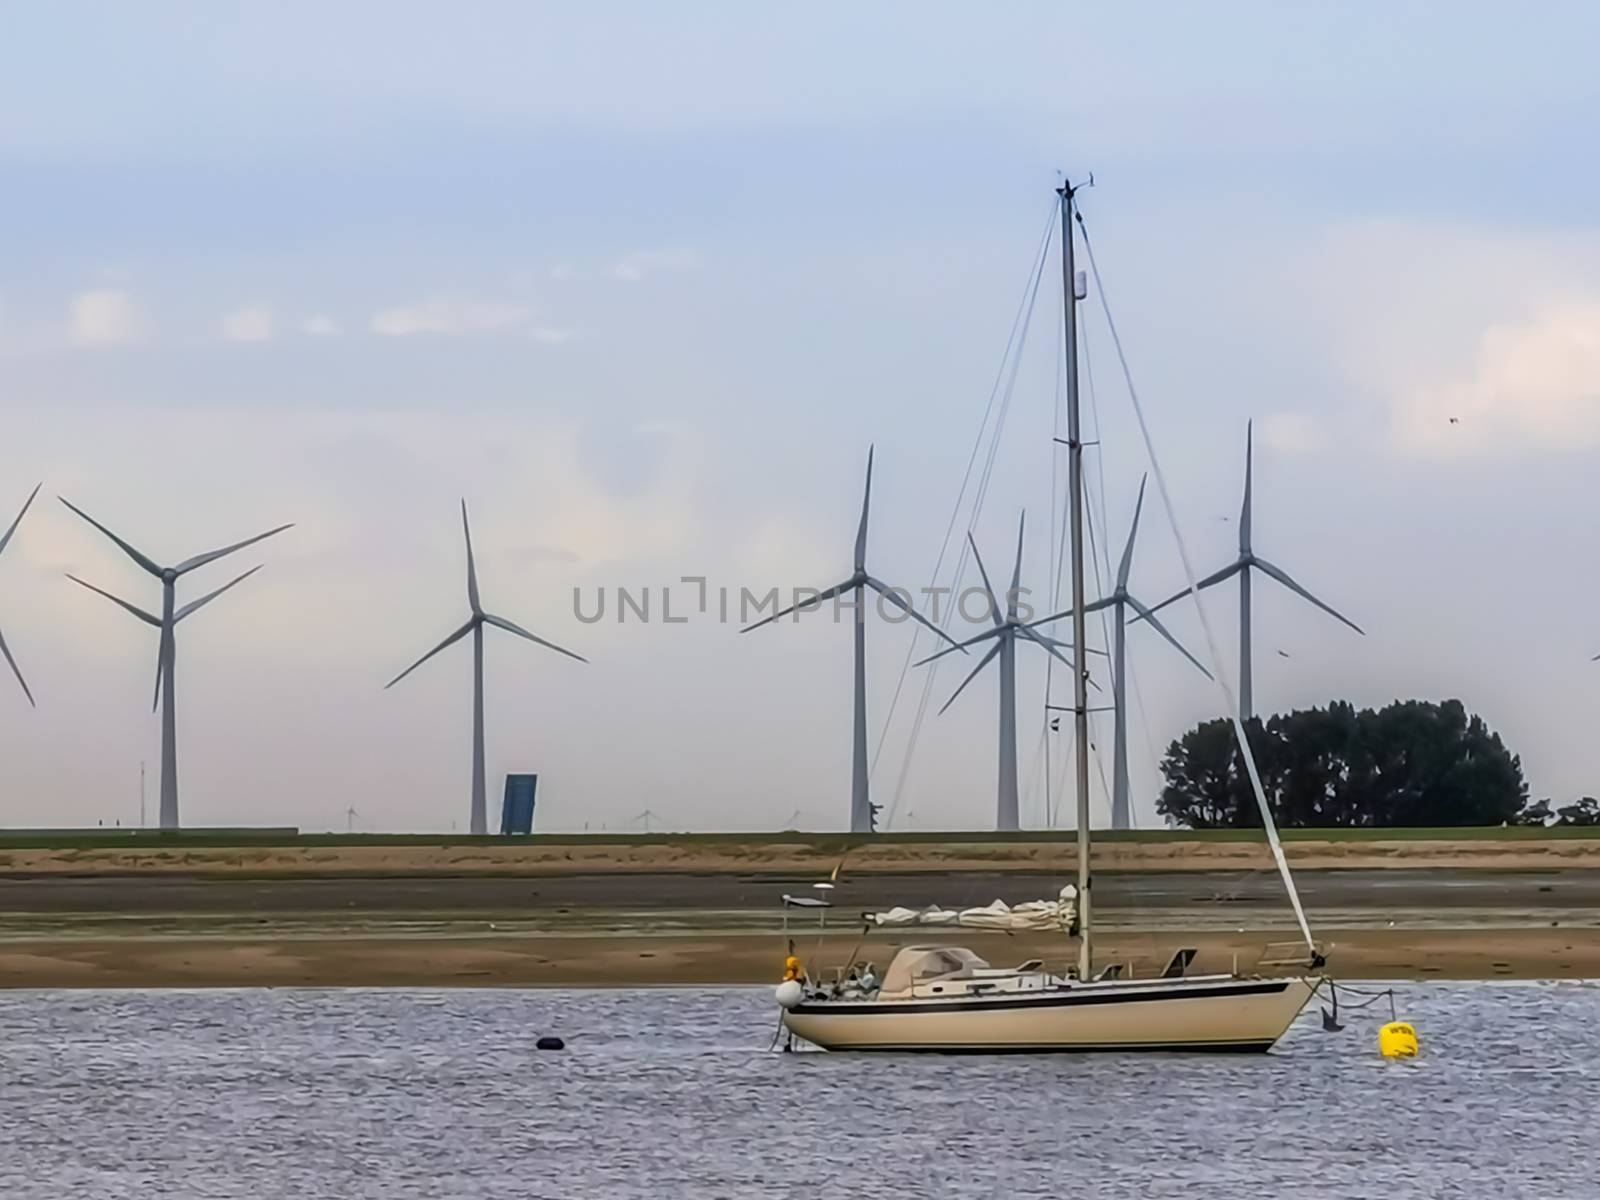 ship sailing on the ocean of Sint annaland, Landscape with windmills, Zeeland, The Netherlands by charlottebleijenberg